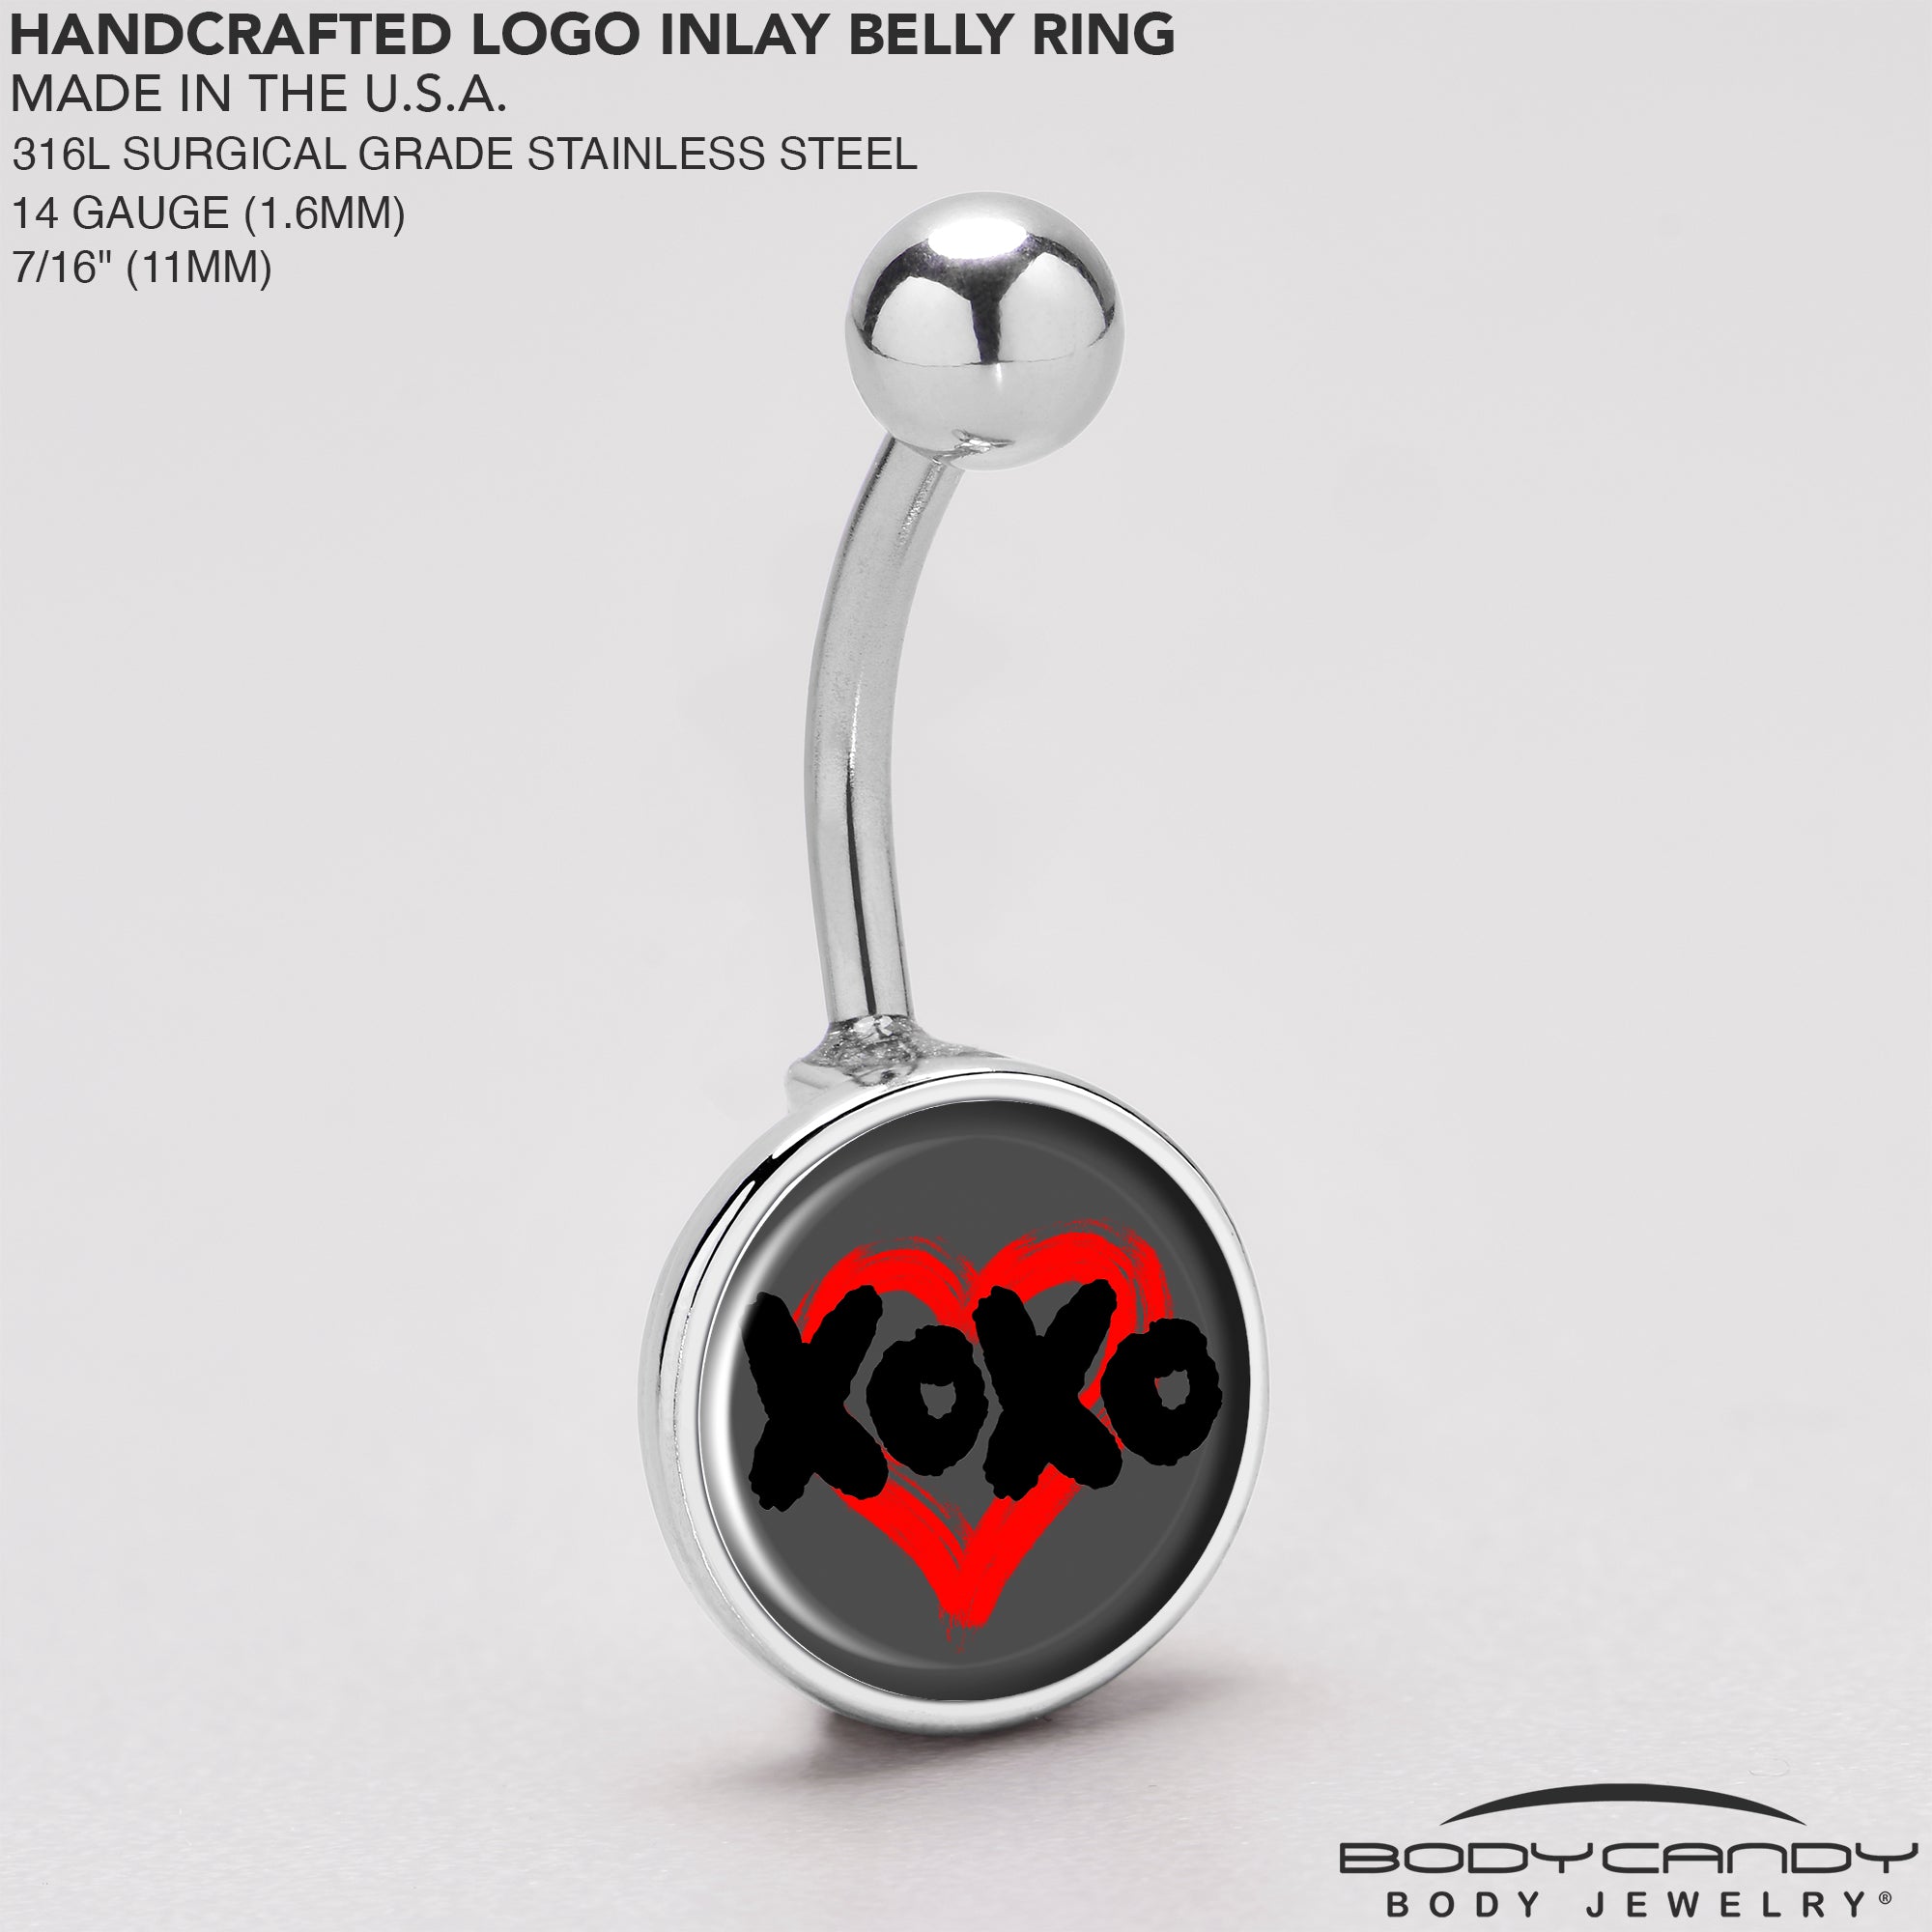 XOXO Heart Belly Ring